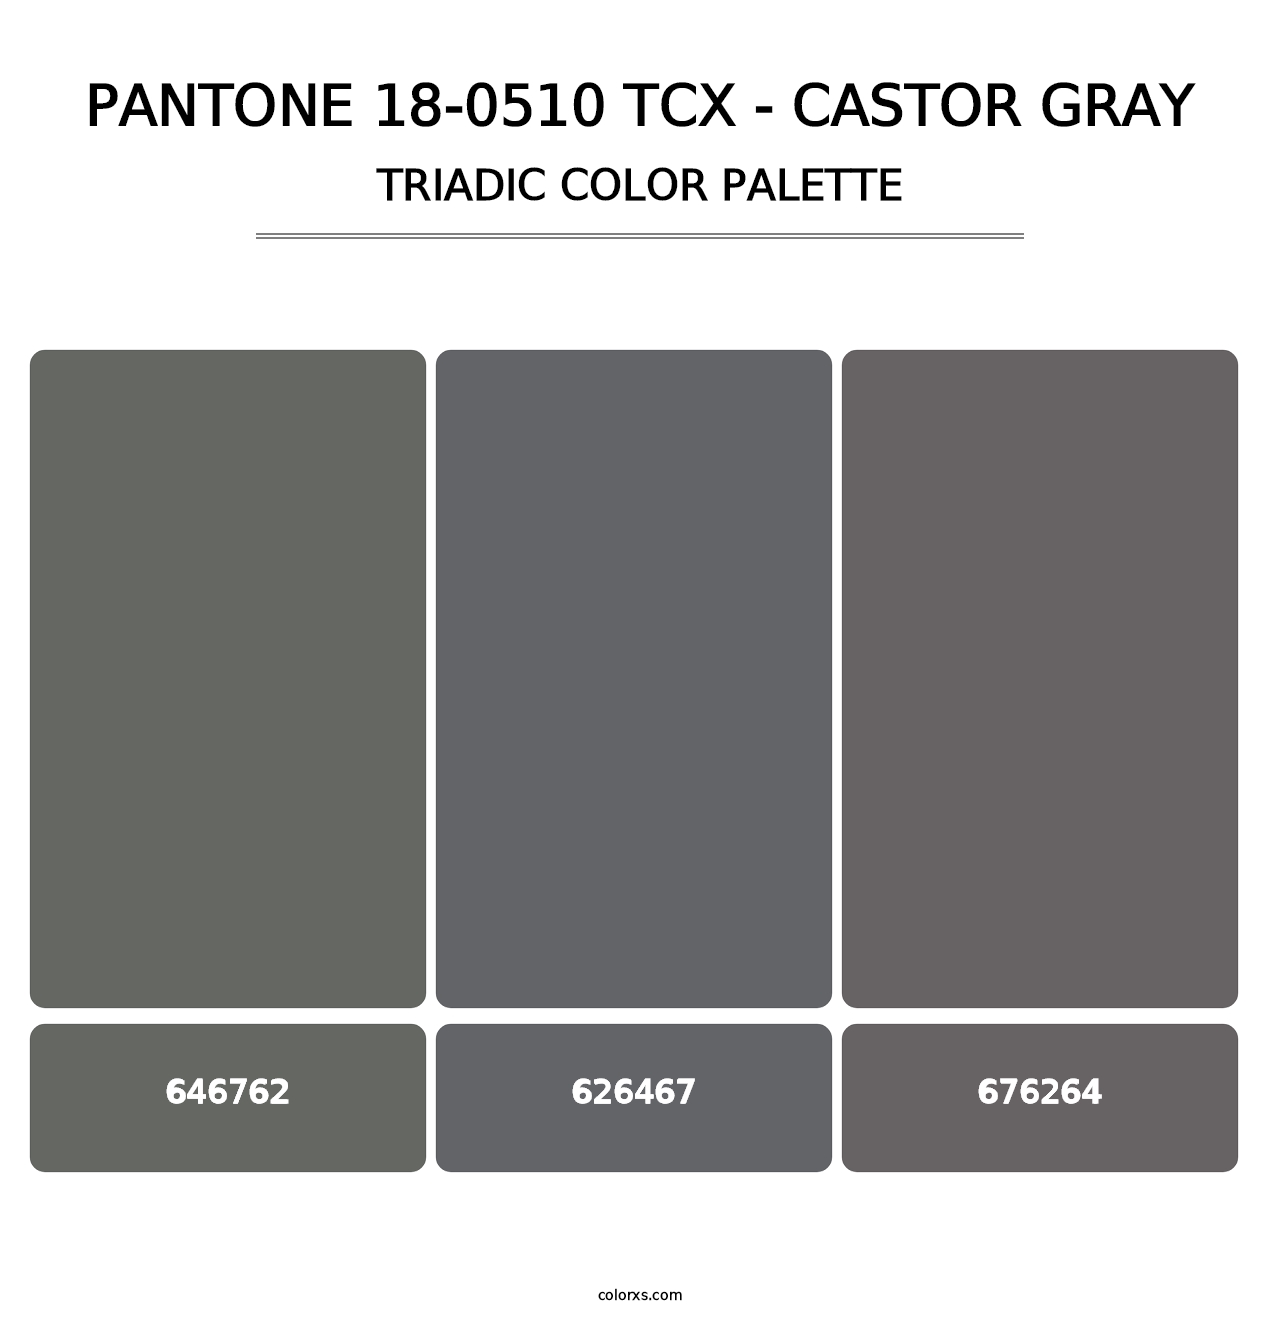 PANTONE 18-0510 TCX - Castor Gray - Triadic Color Palette